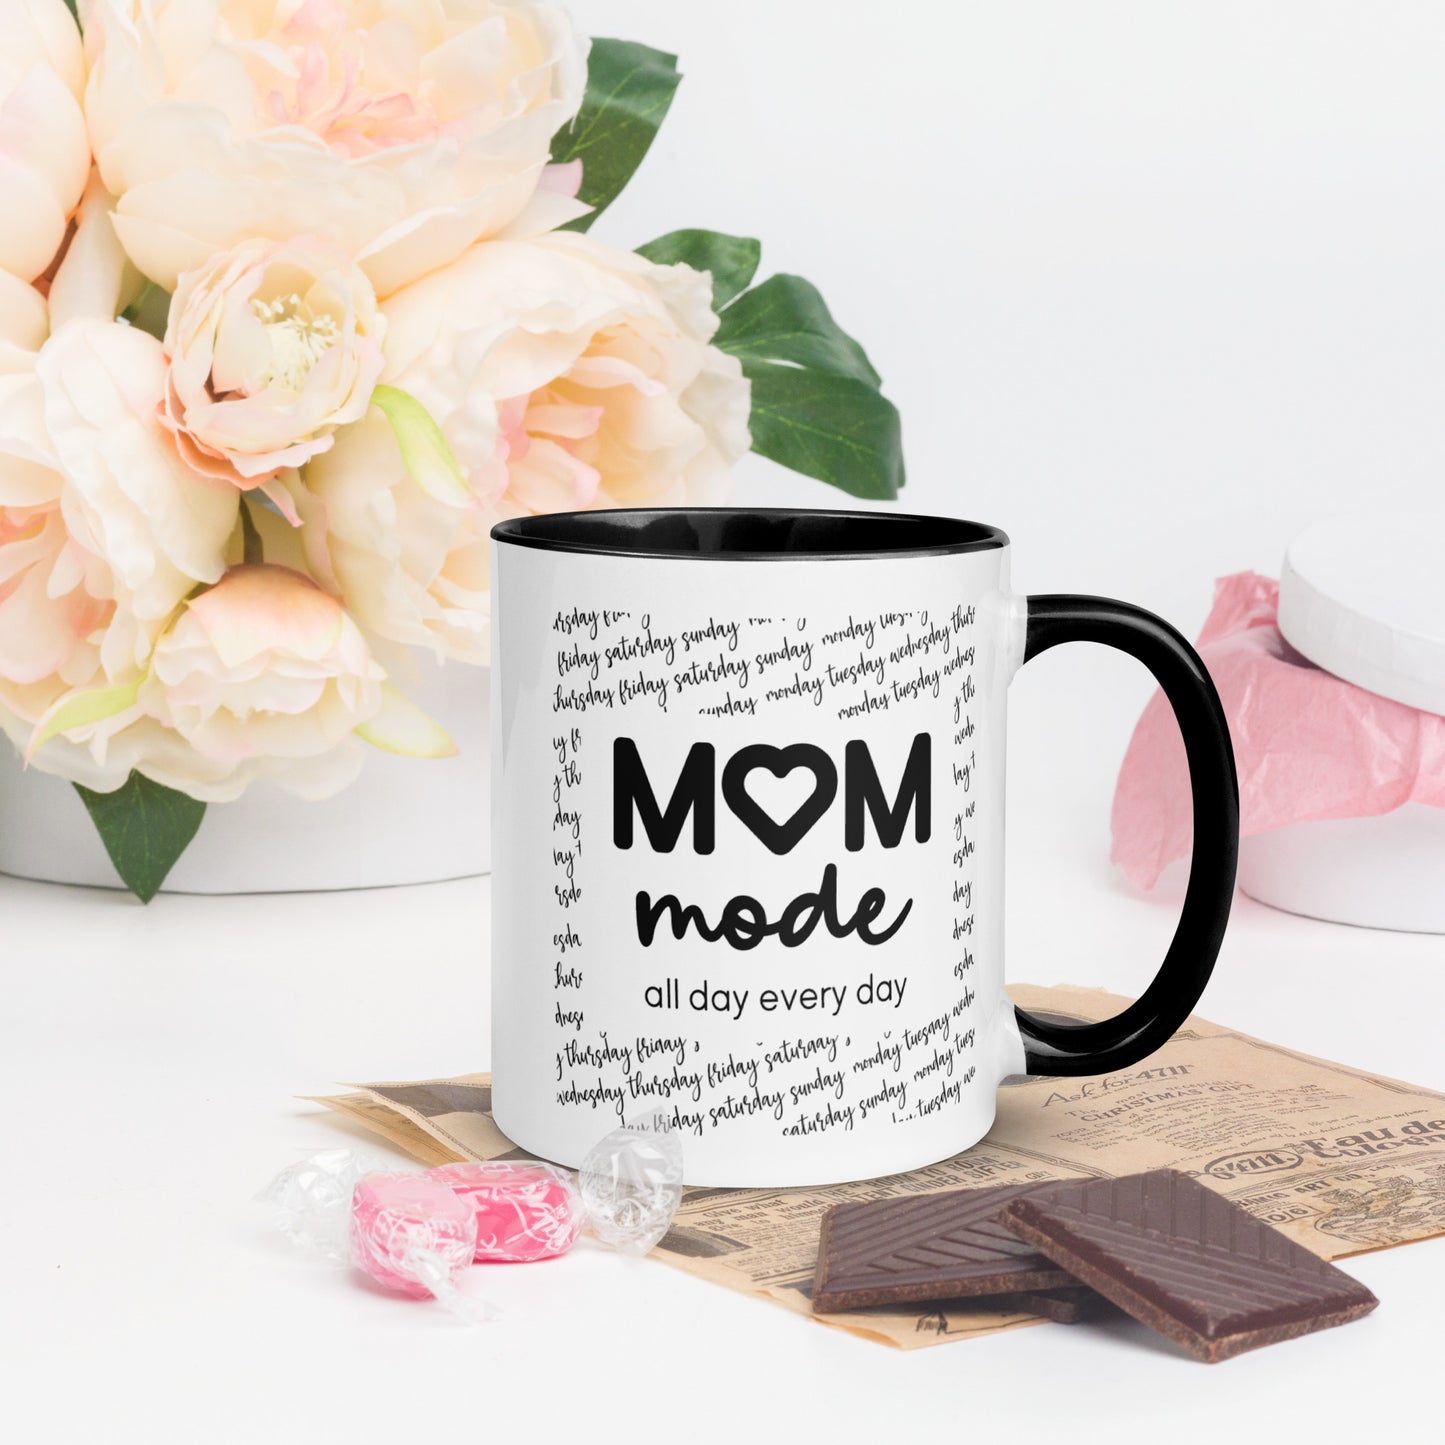 " Mom Mode" Mug